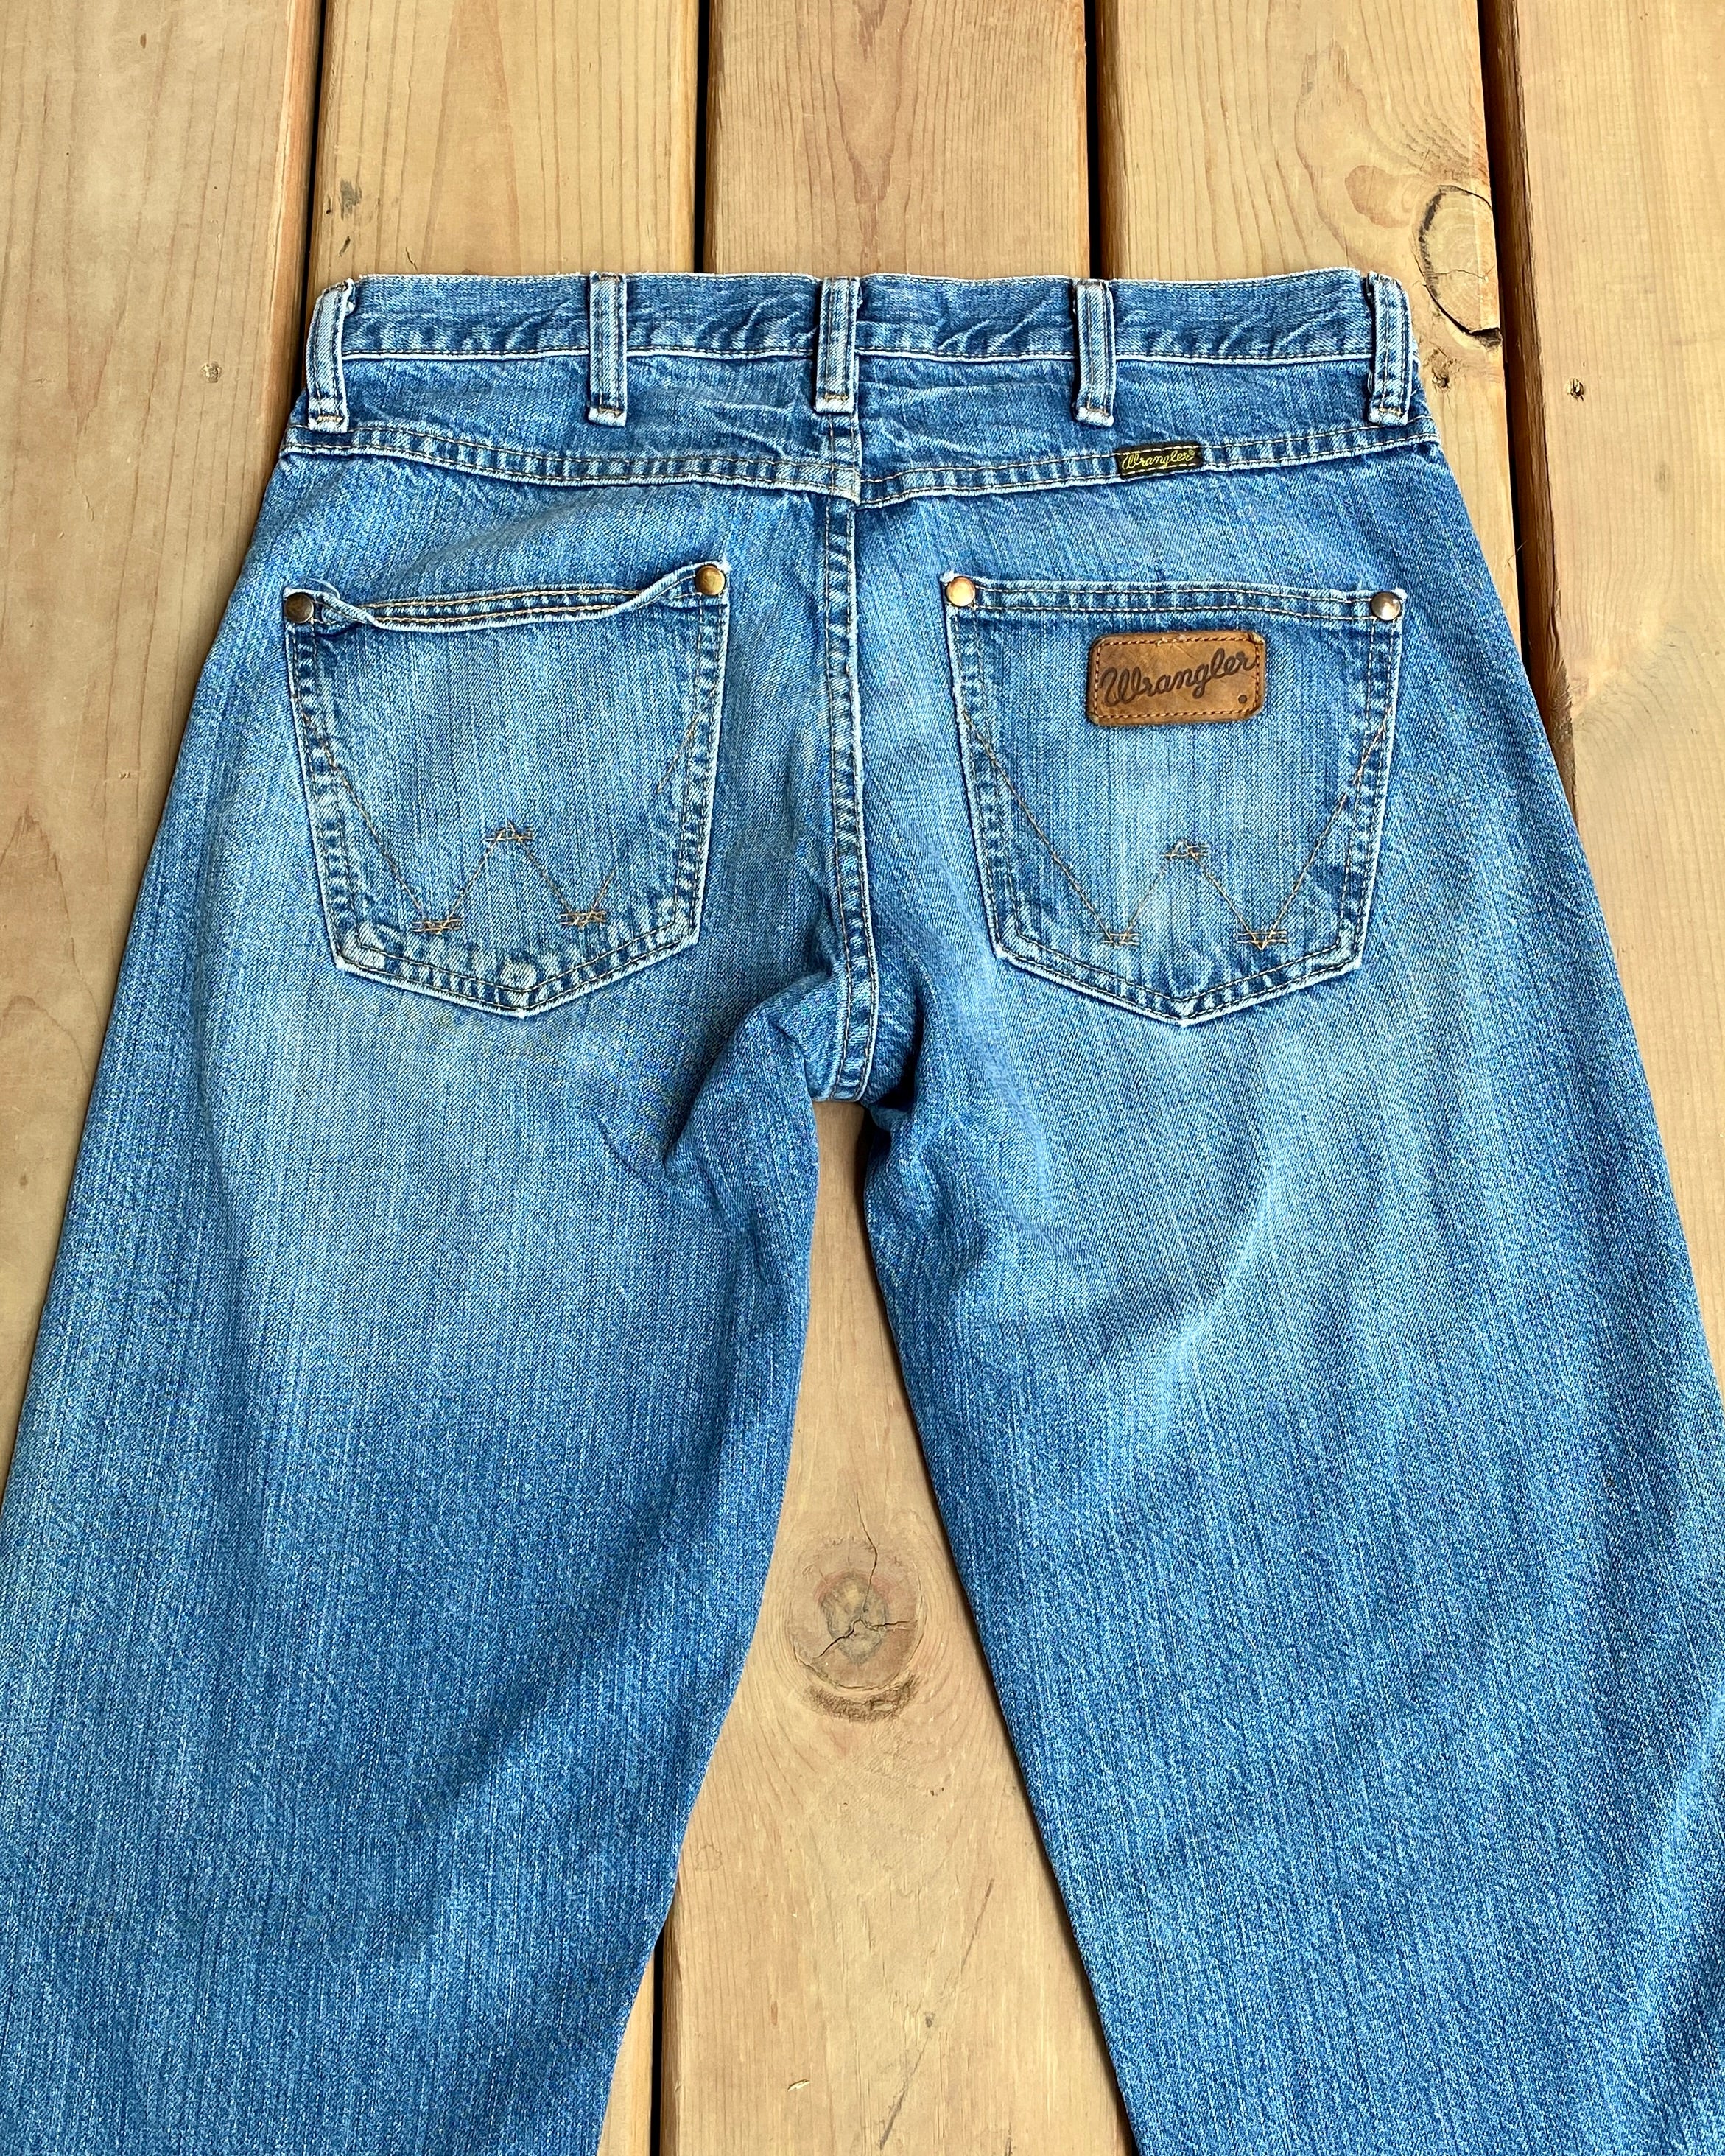 Vintage 2000s Wrangler Boot Cut Medium Blue Wash Jeans size 30